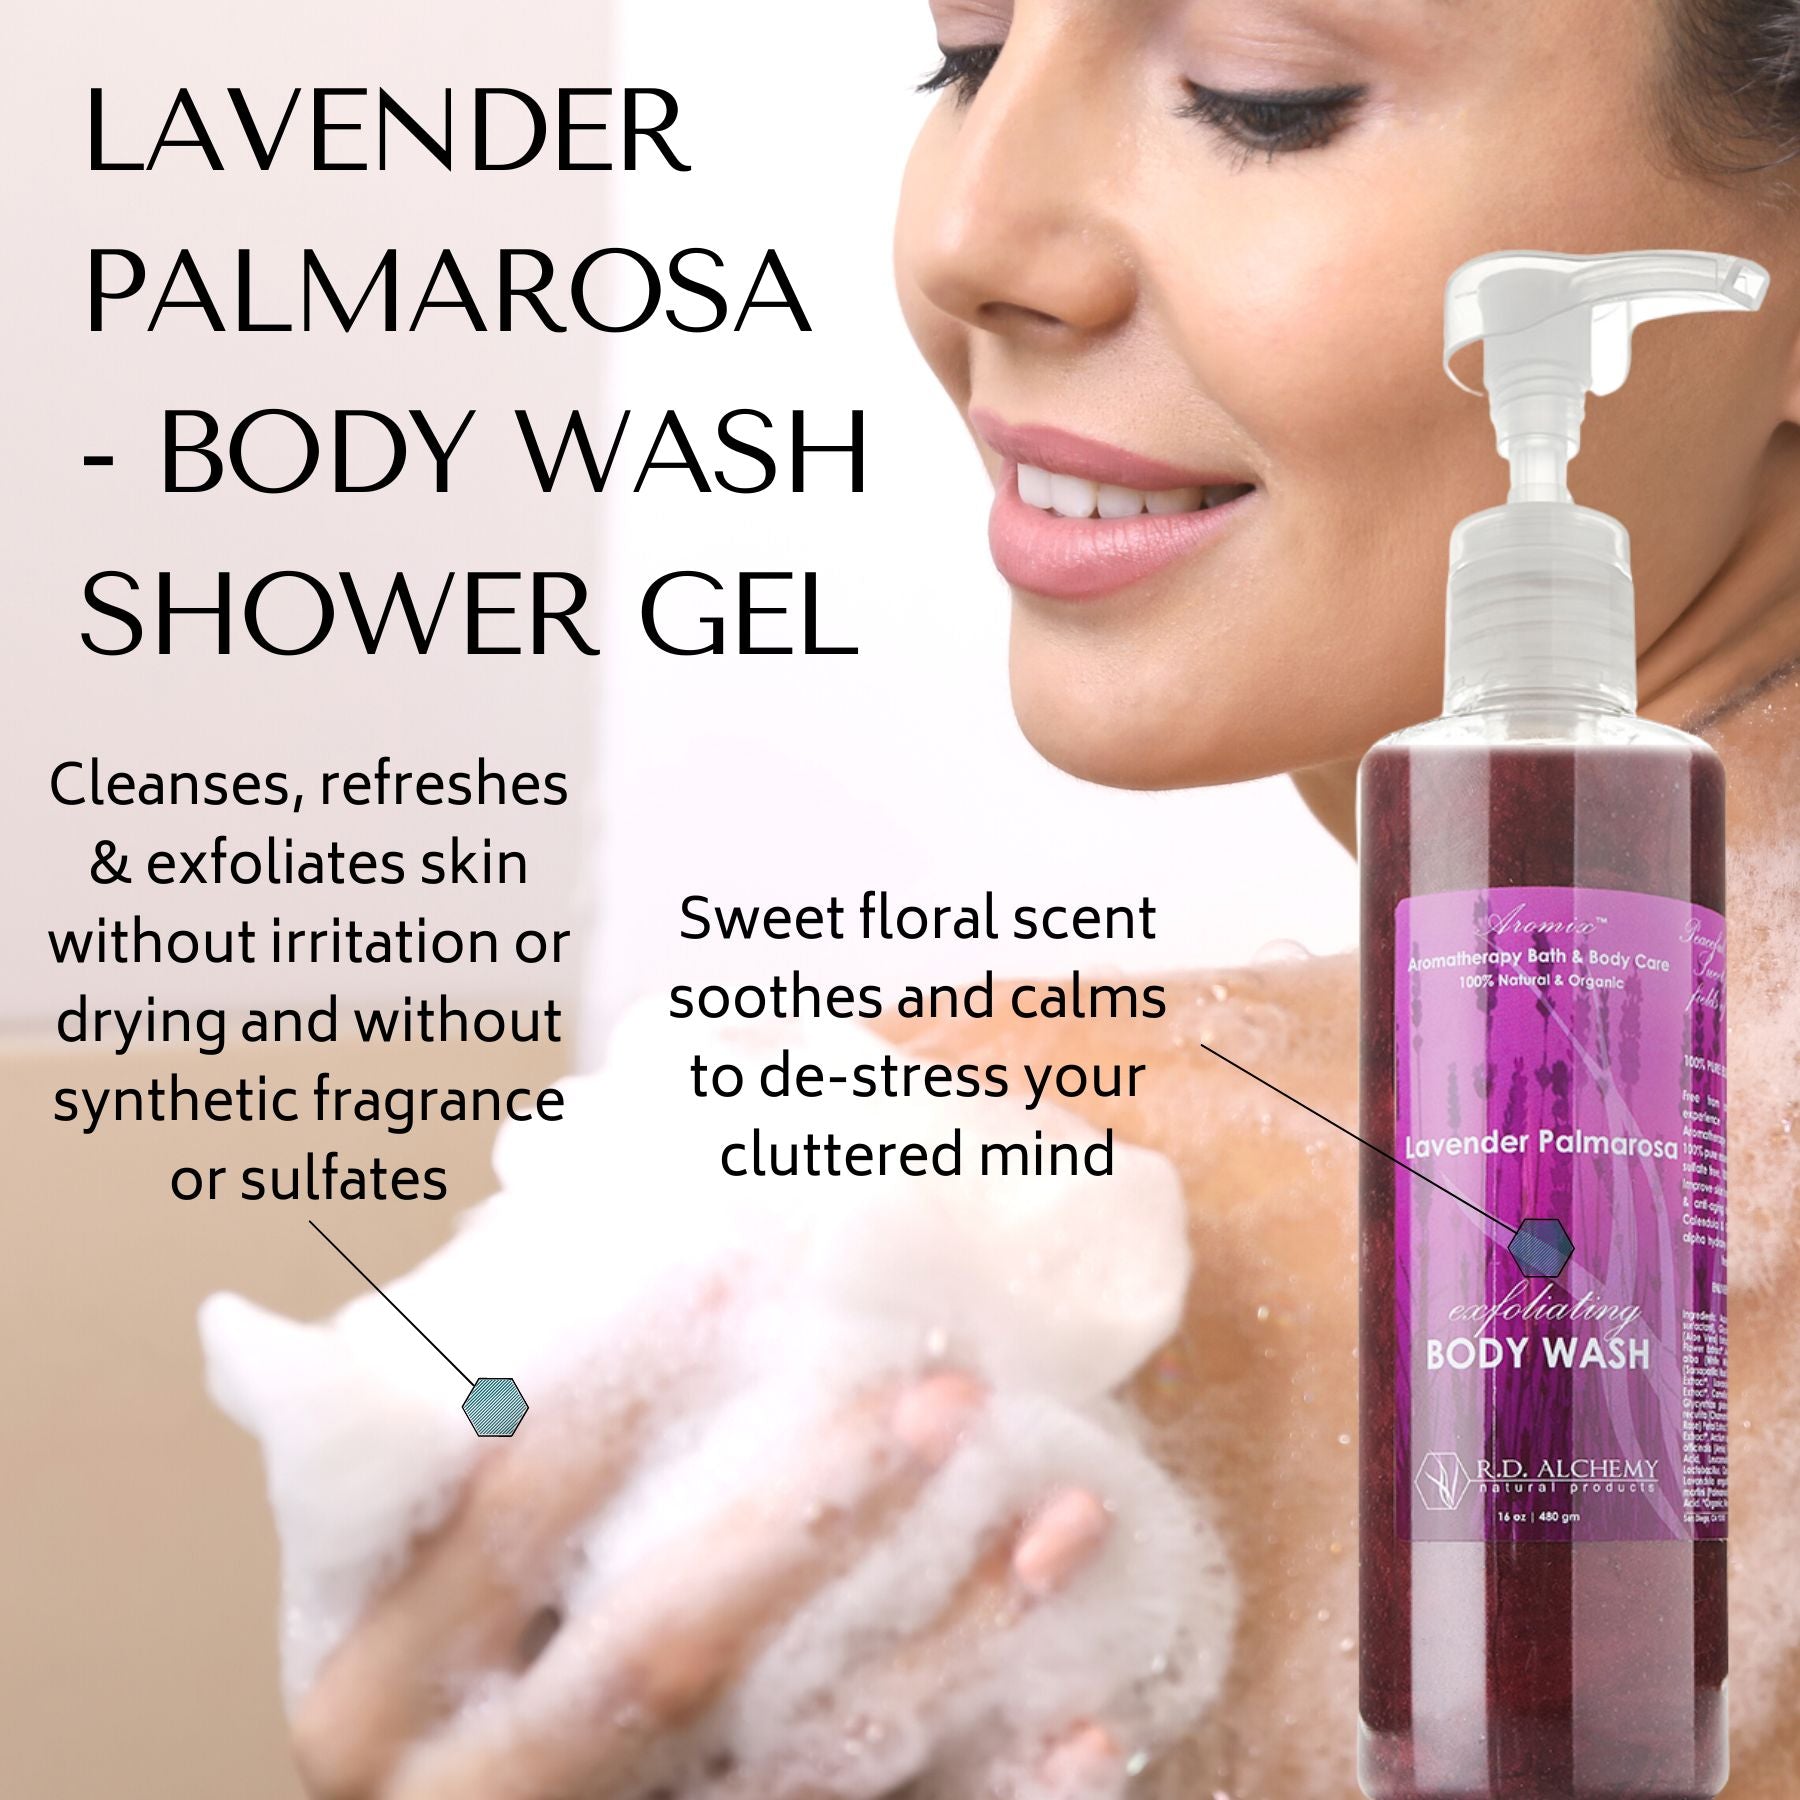 Lavender Palmarosa - Body Wash Shower Gel